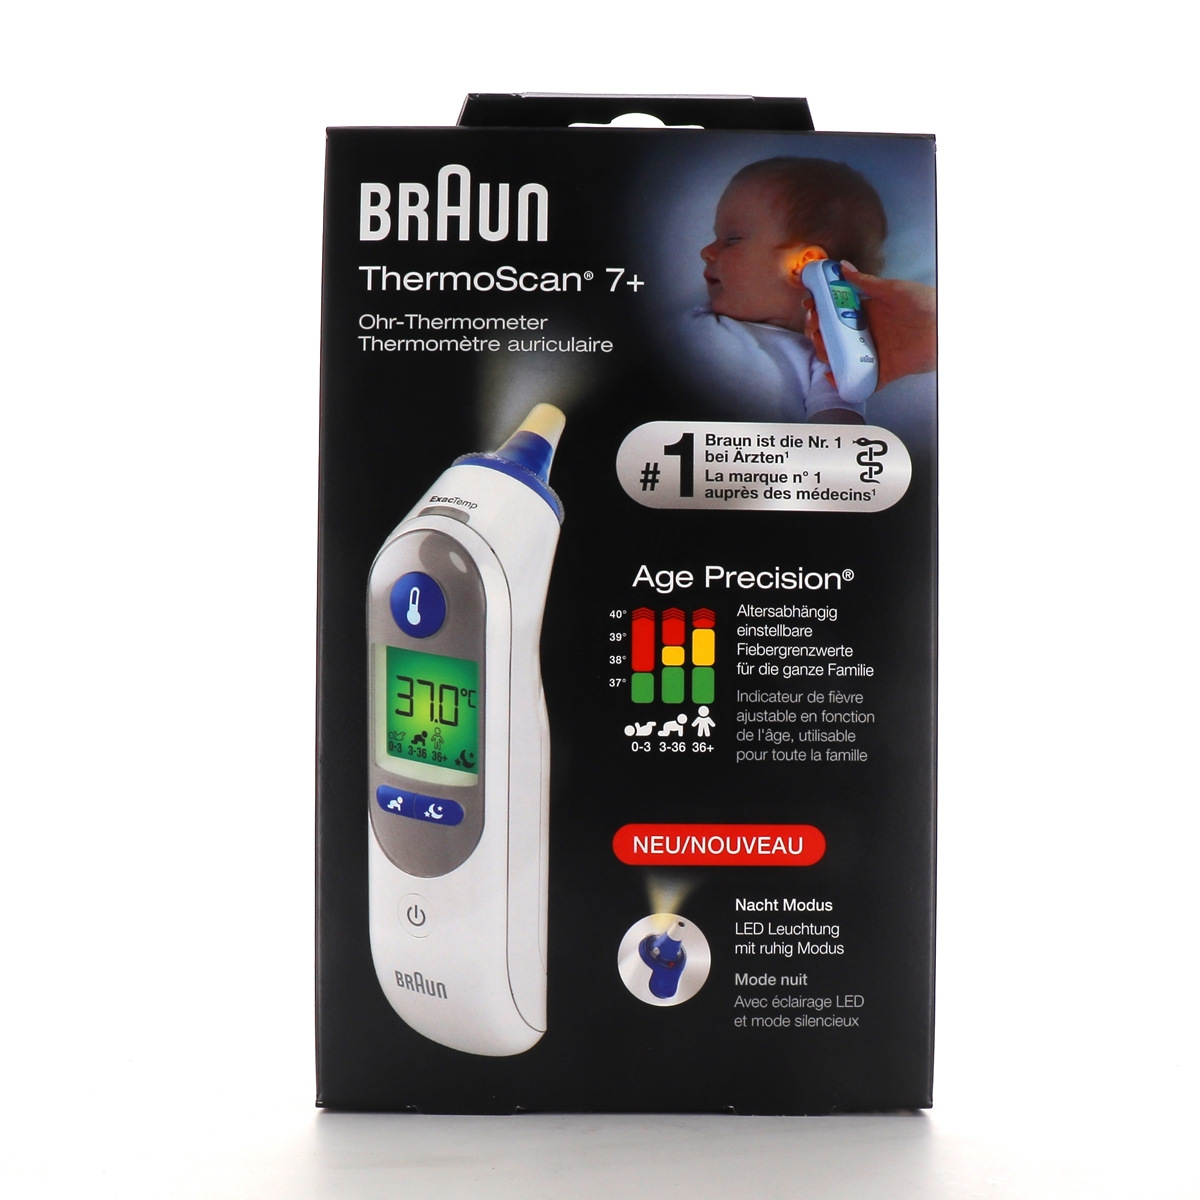 Braun ThermoScan 7 + avec Age Precision 